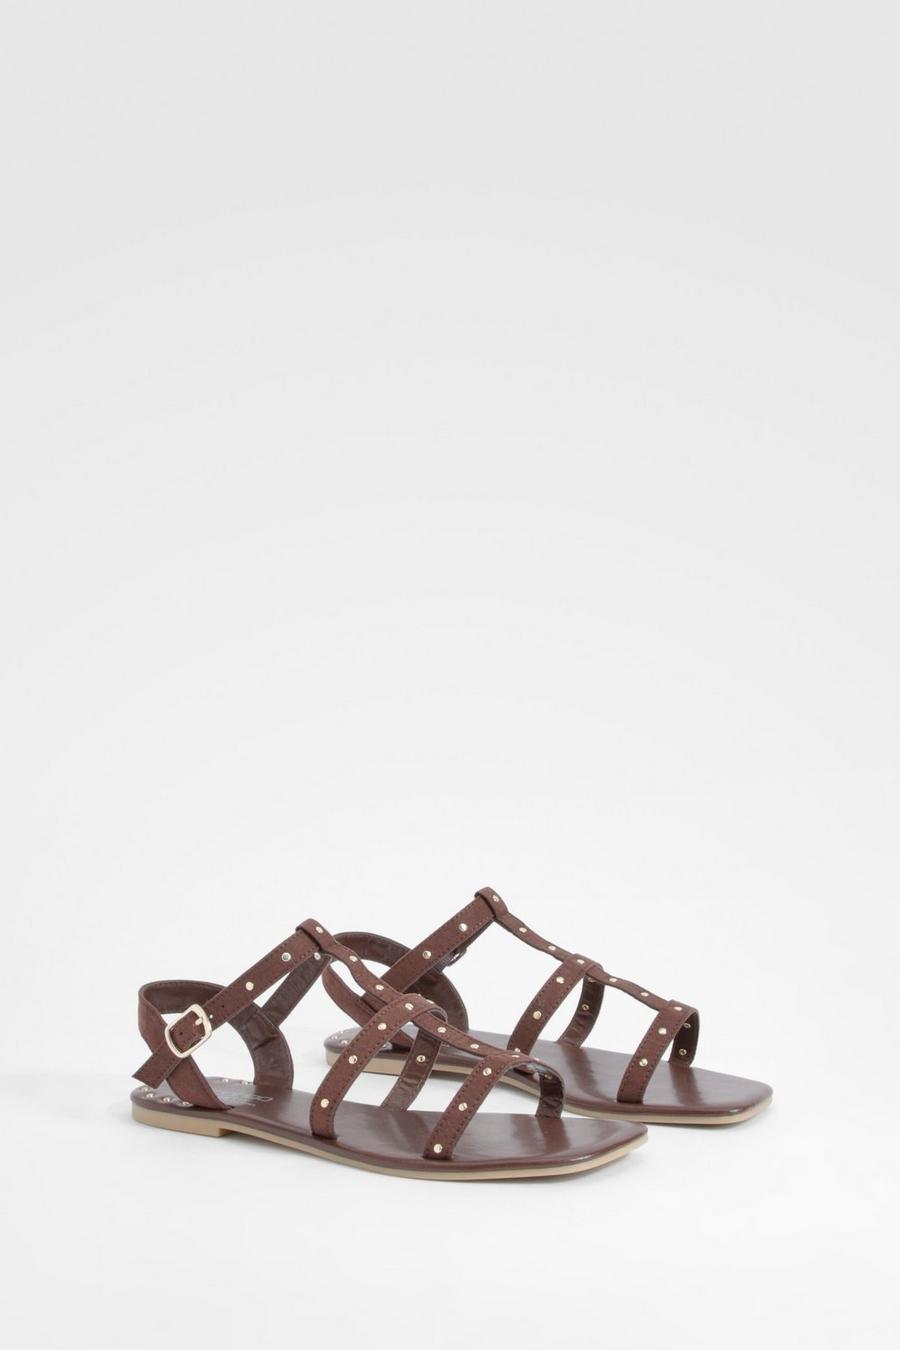 Chocolate Wide Width Studded Gladiator Sandals